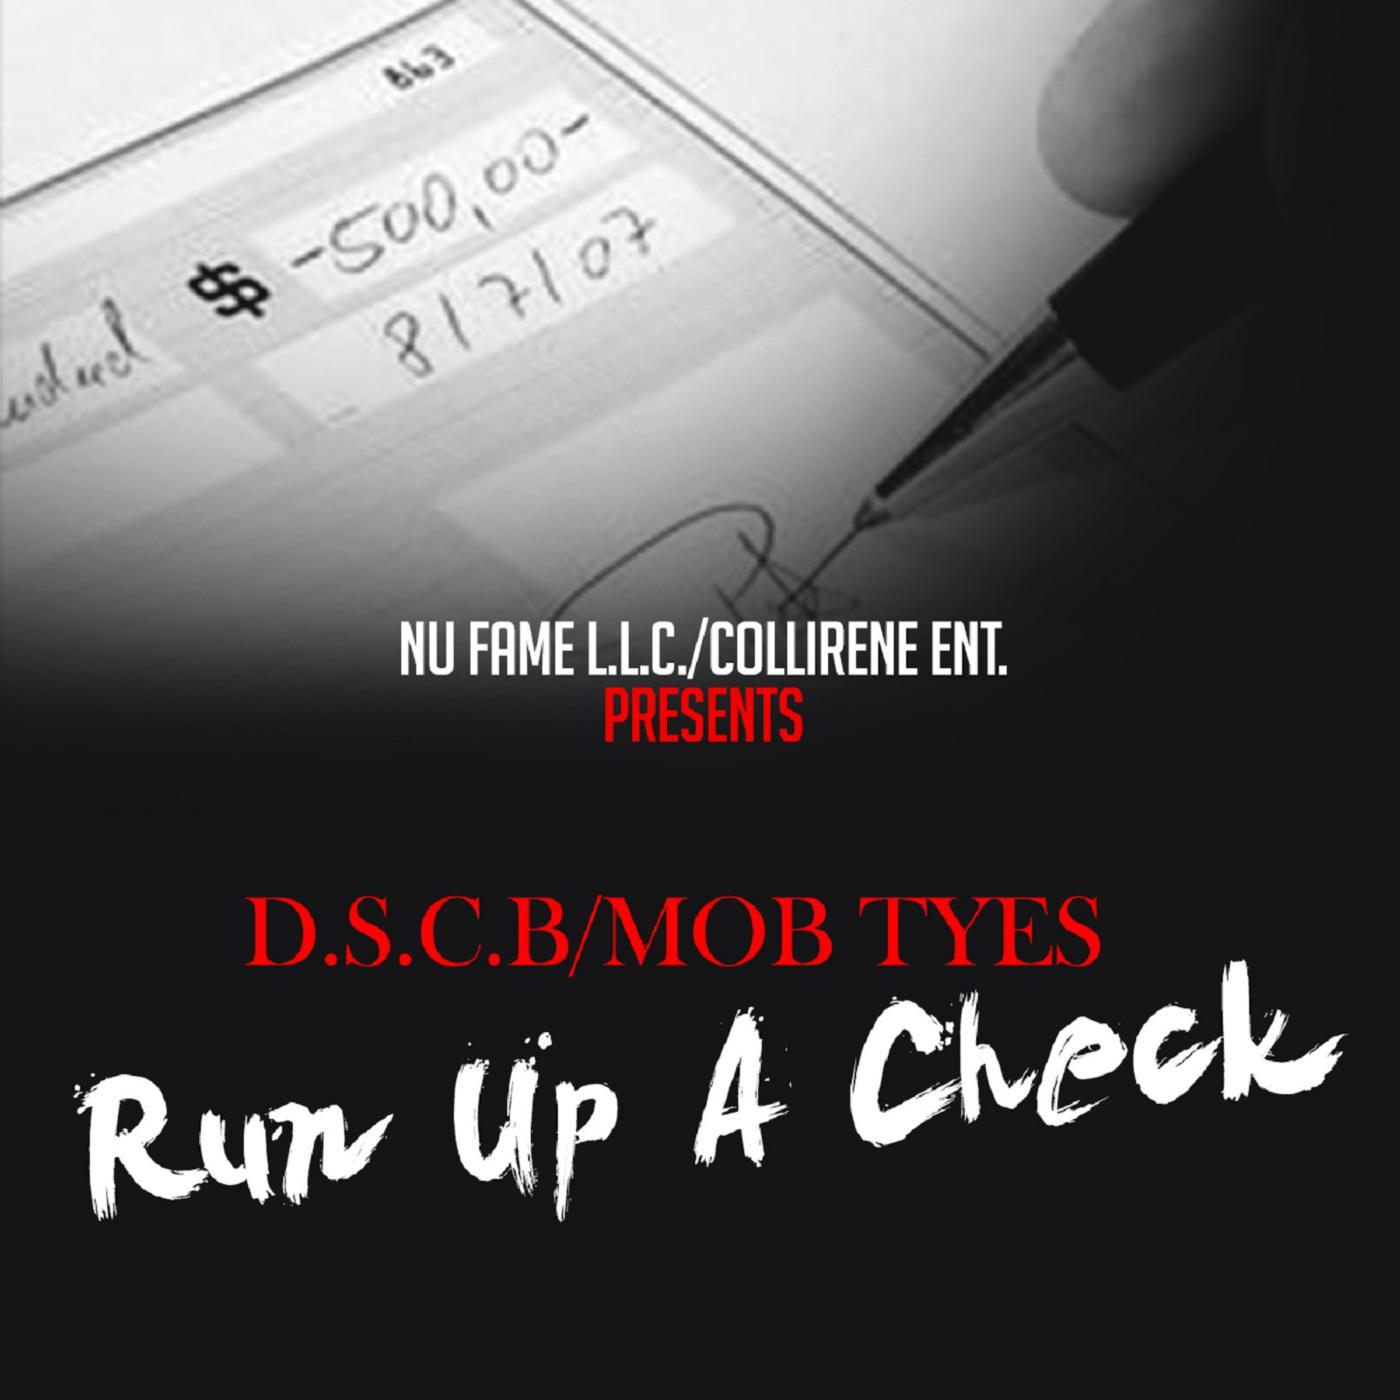 D.S.C.B/Mobtyes - Run up a Check